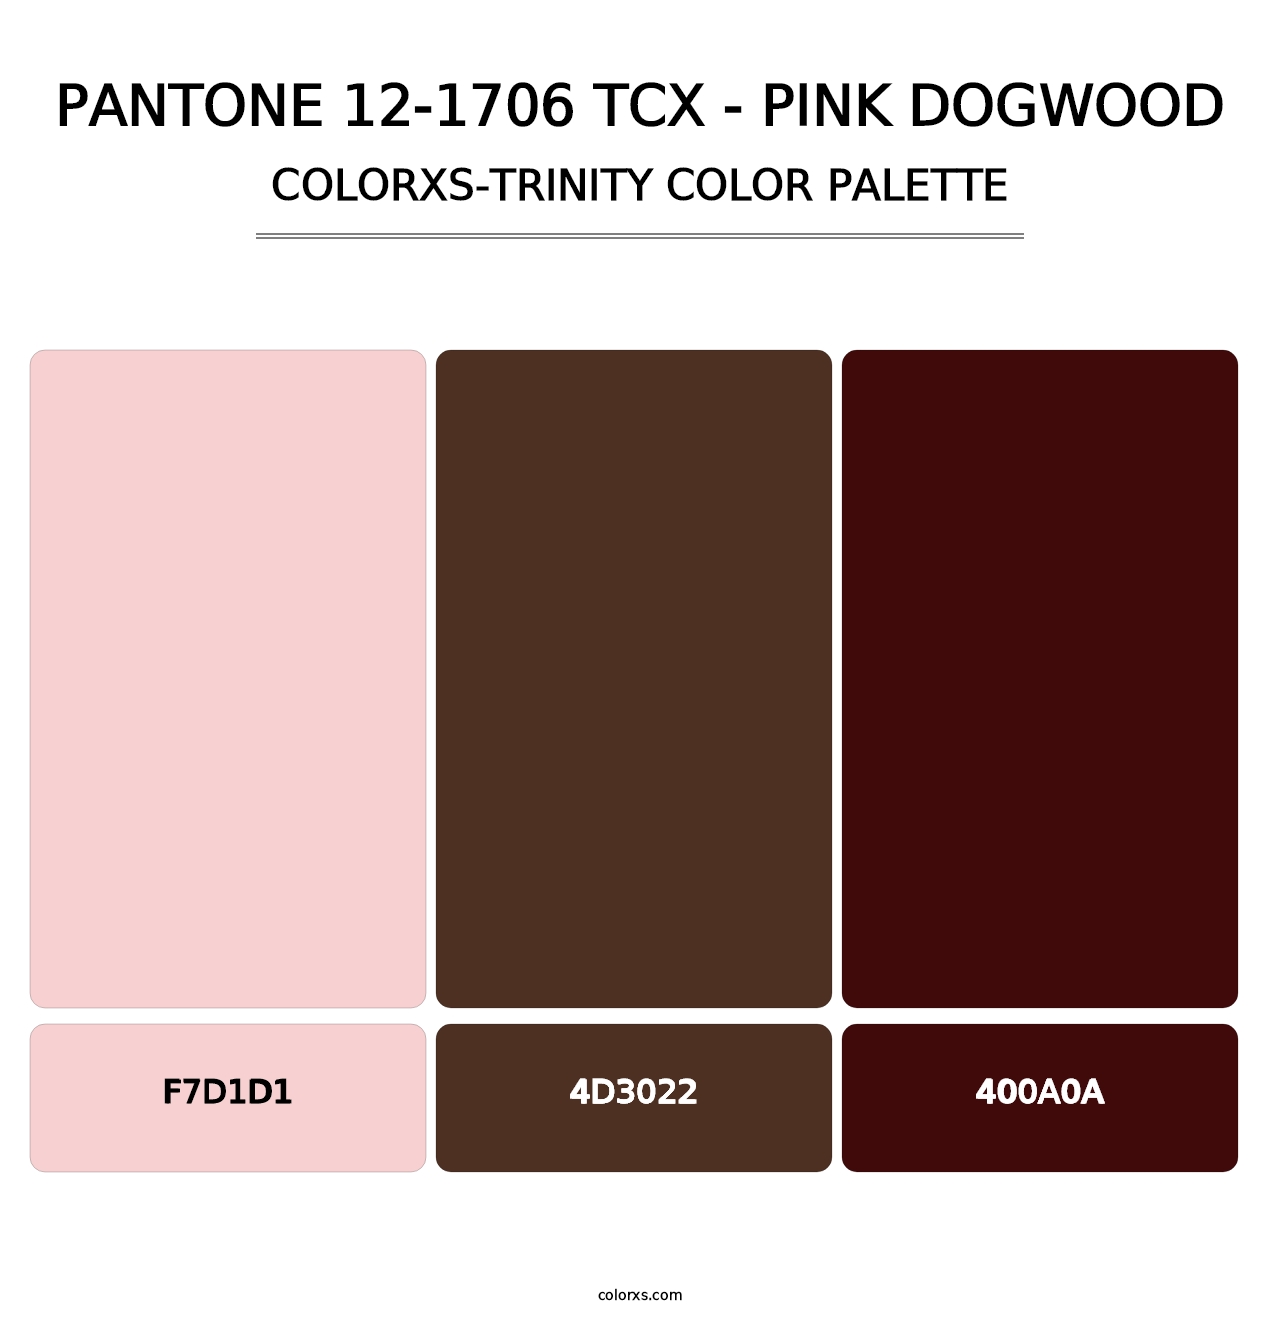 PANTONE 12-1706 TCX - Pink Dogwood - Colorxs Trinity Palette